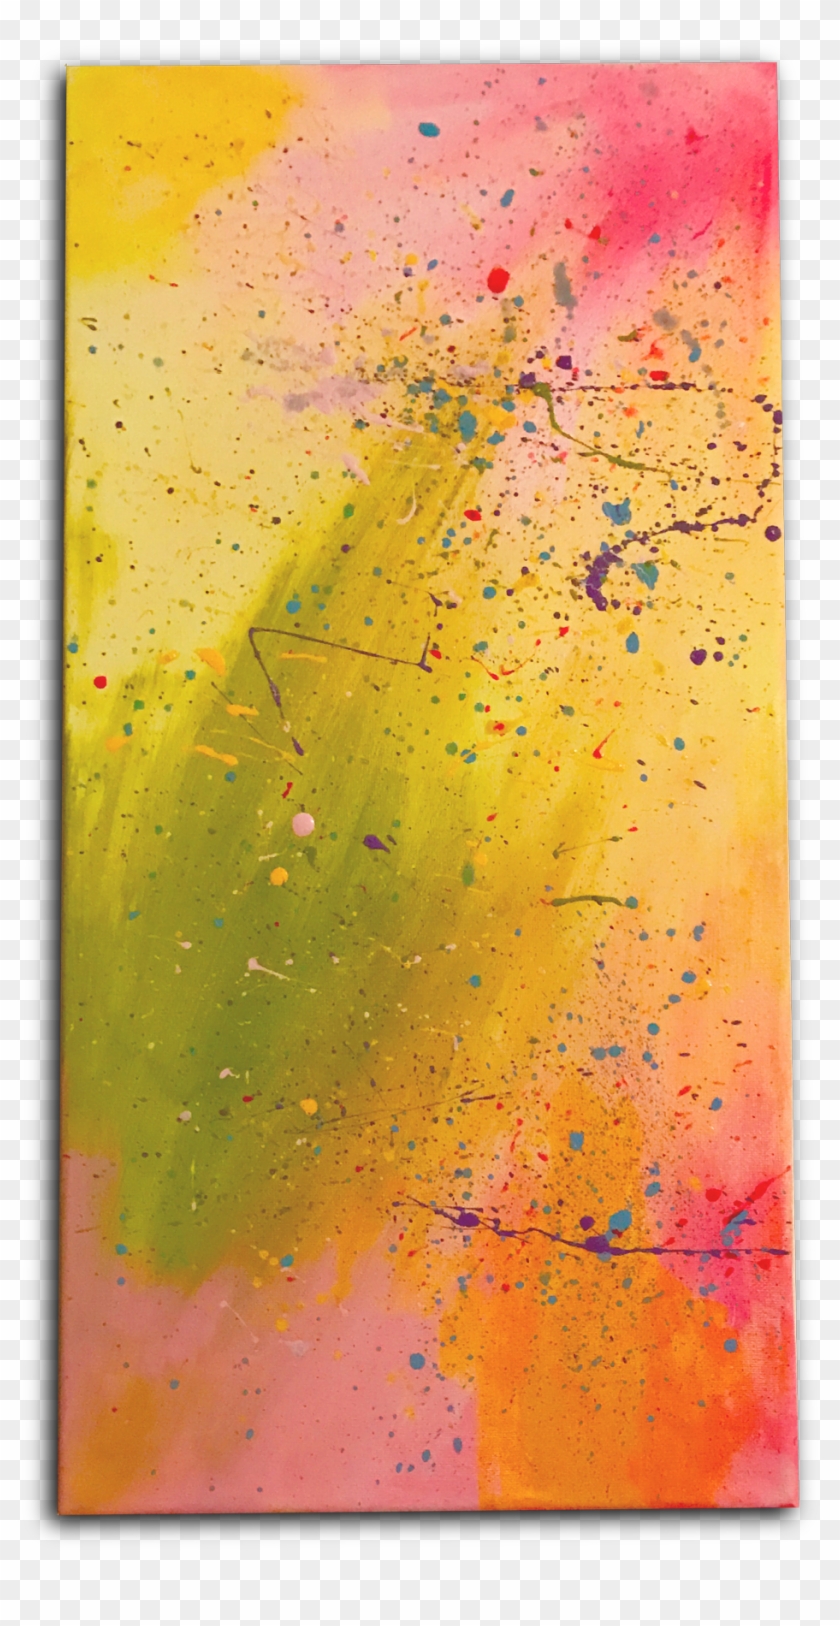 Neon Splatter Paint On Canvas - Painting Clipart #383216